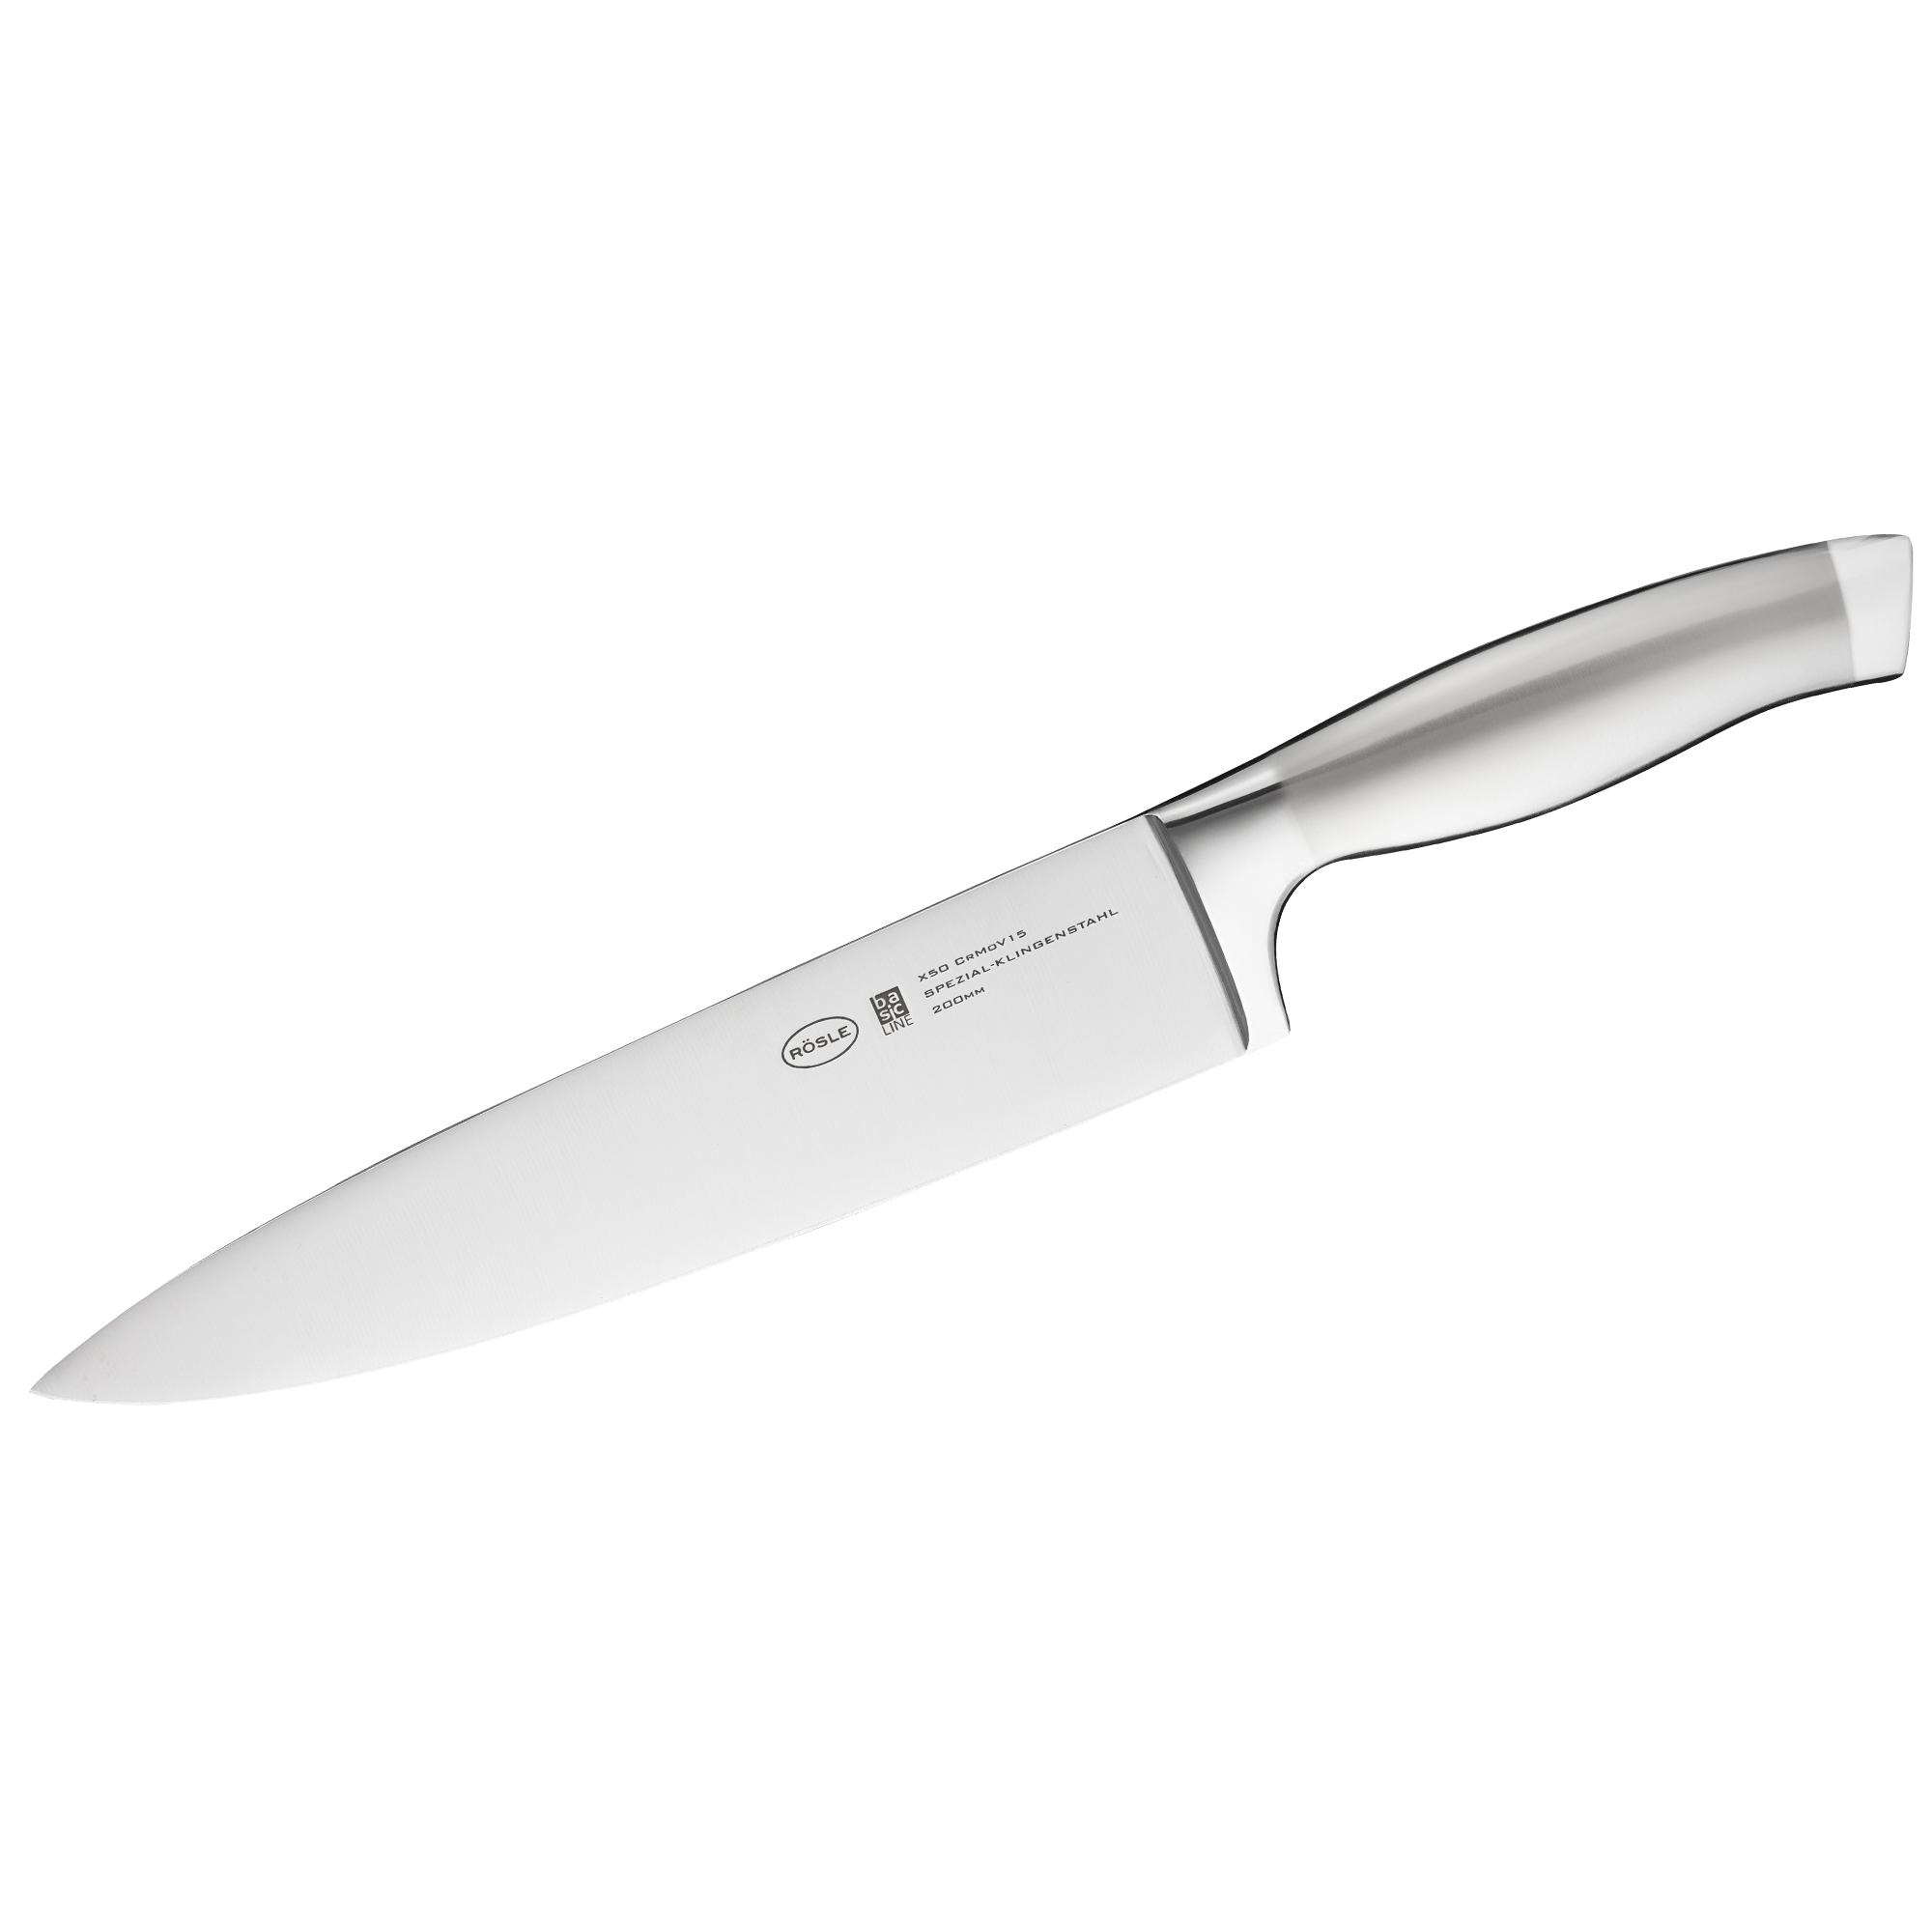 Chef's knife "Basic Line" 20 cm I 8 in.